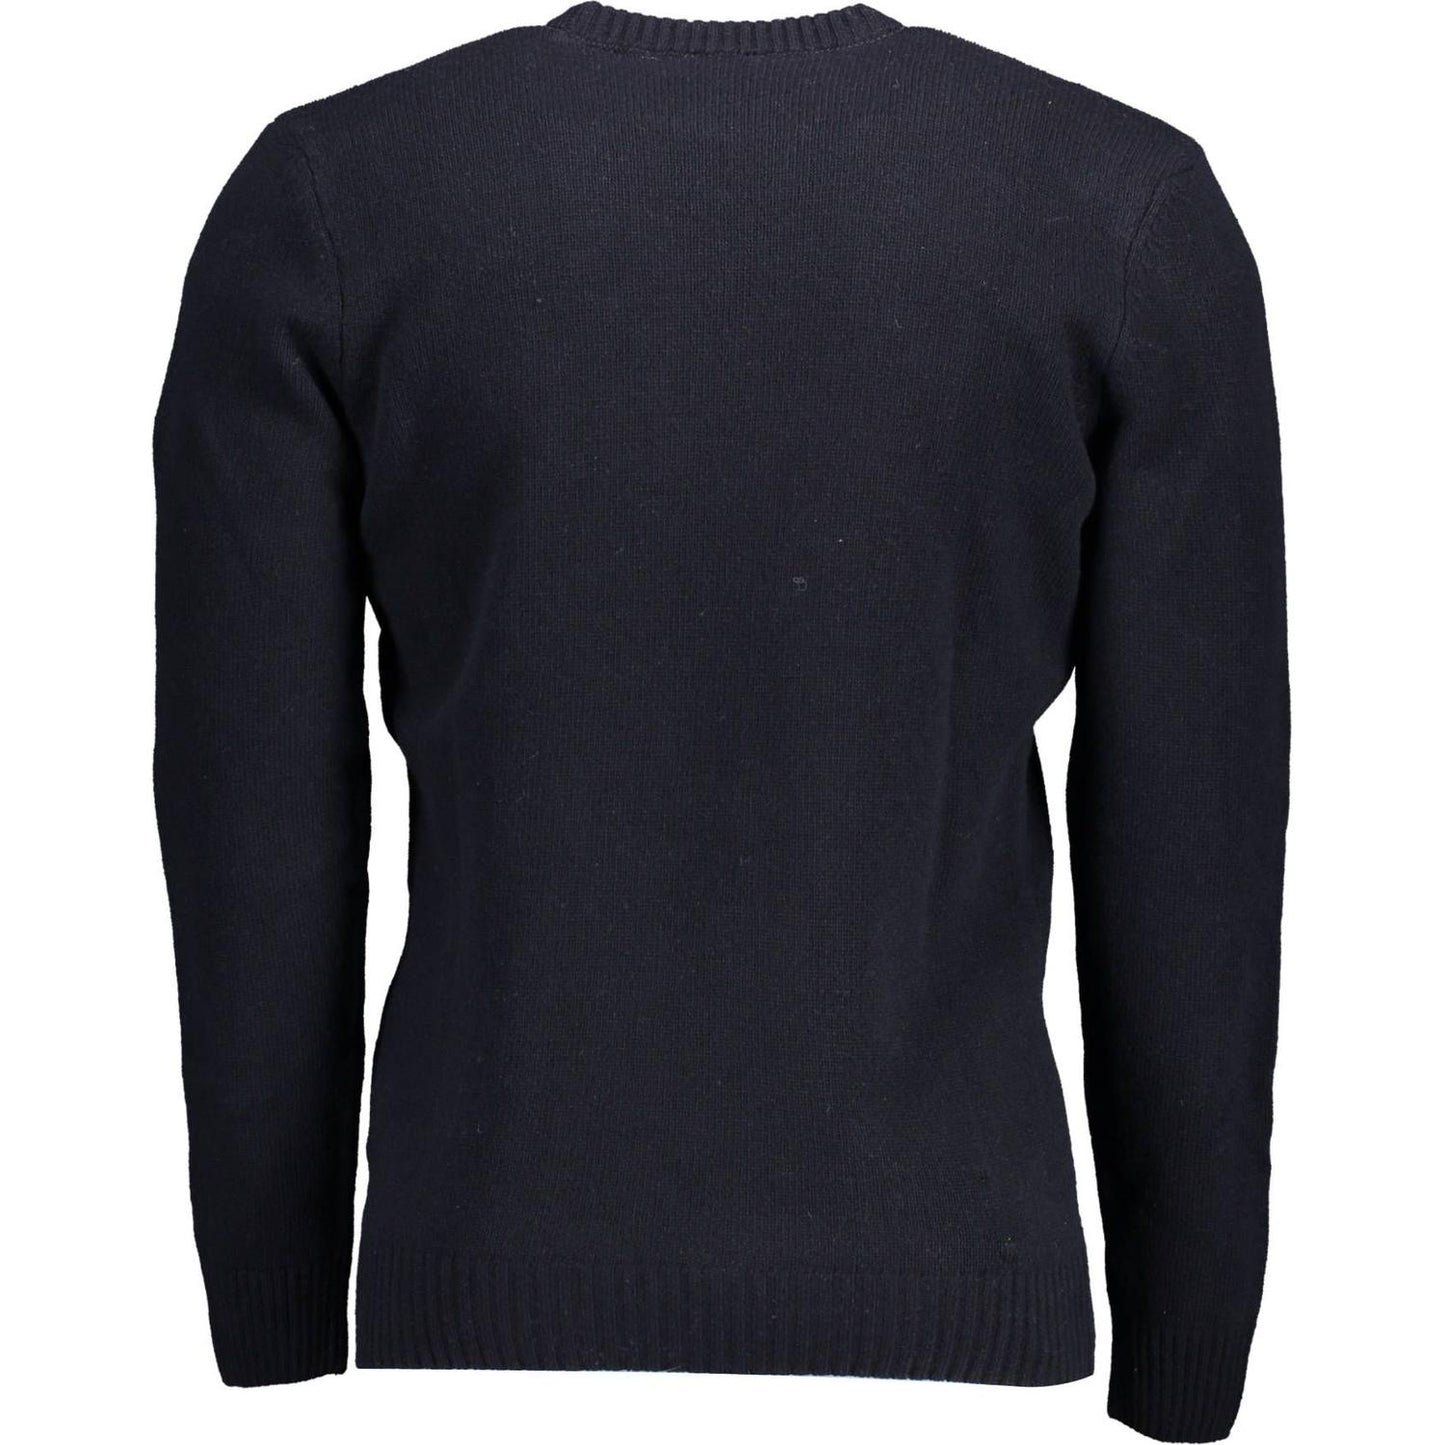 U.S. POLO ASSN. Chic Blue Wool Blend Round Neck Sweater chic-blue-wool-blend-round-neck-sweater